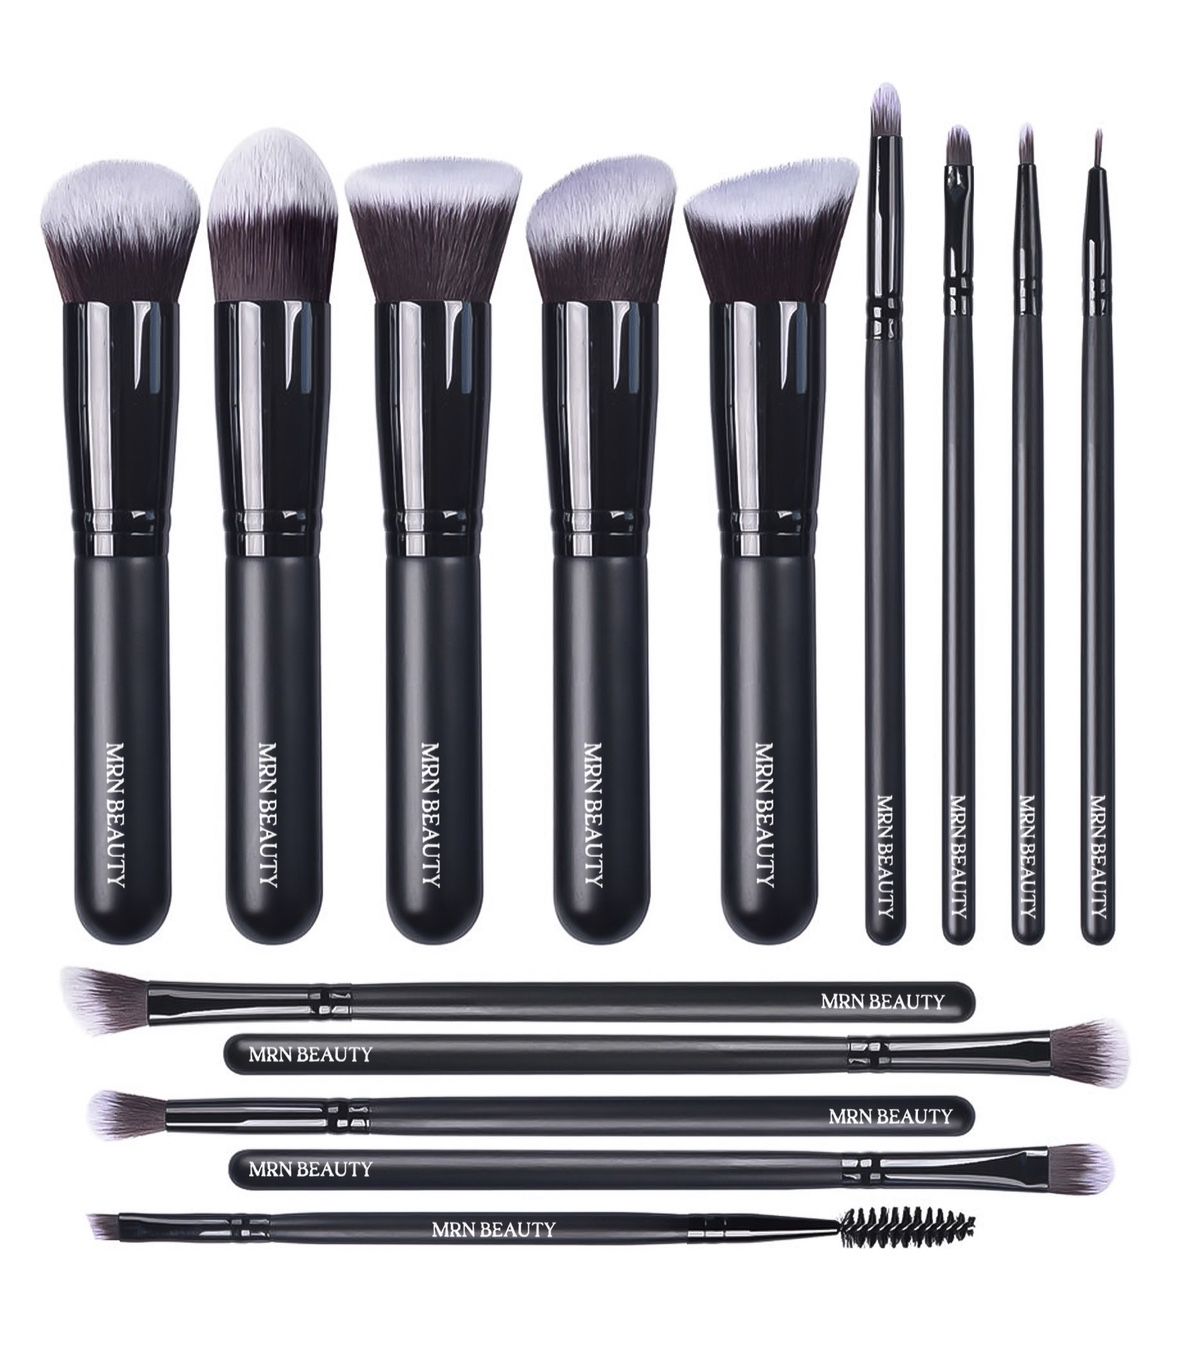 Christmas gift- foundation brushes. Professional makeup brush set. 14 pc premium synthetic brushes. Includes Foundation, contour, blush.